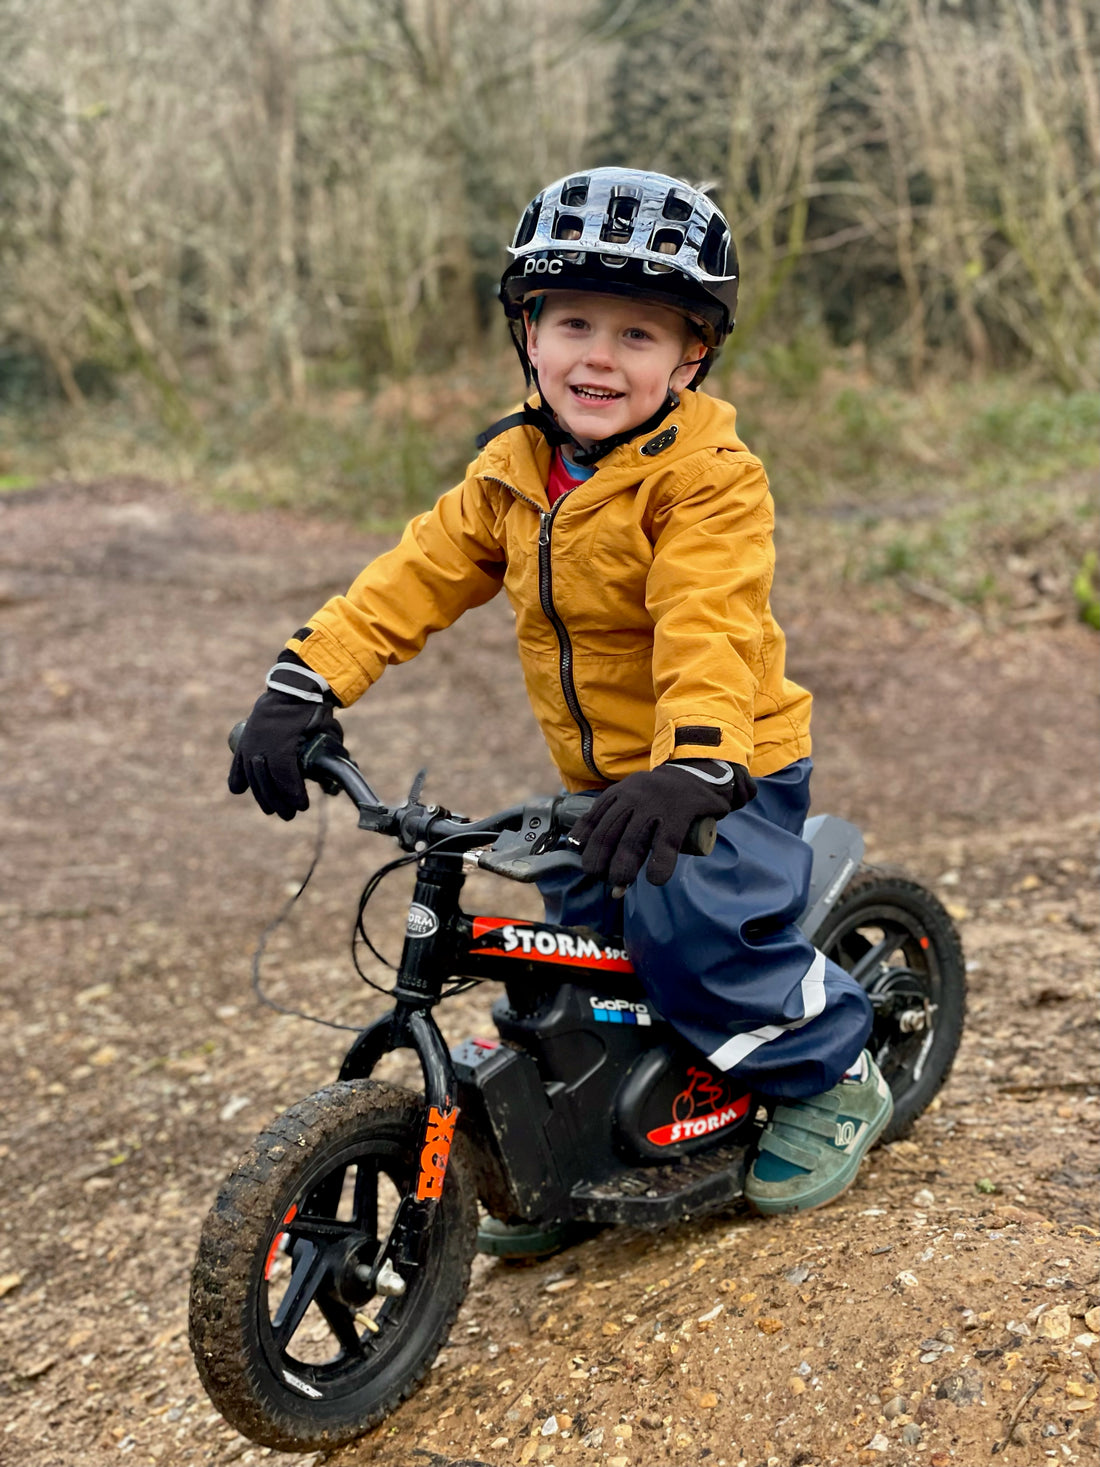  Small boy wearing a black helmet riding a black 12" storm electric balance bike